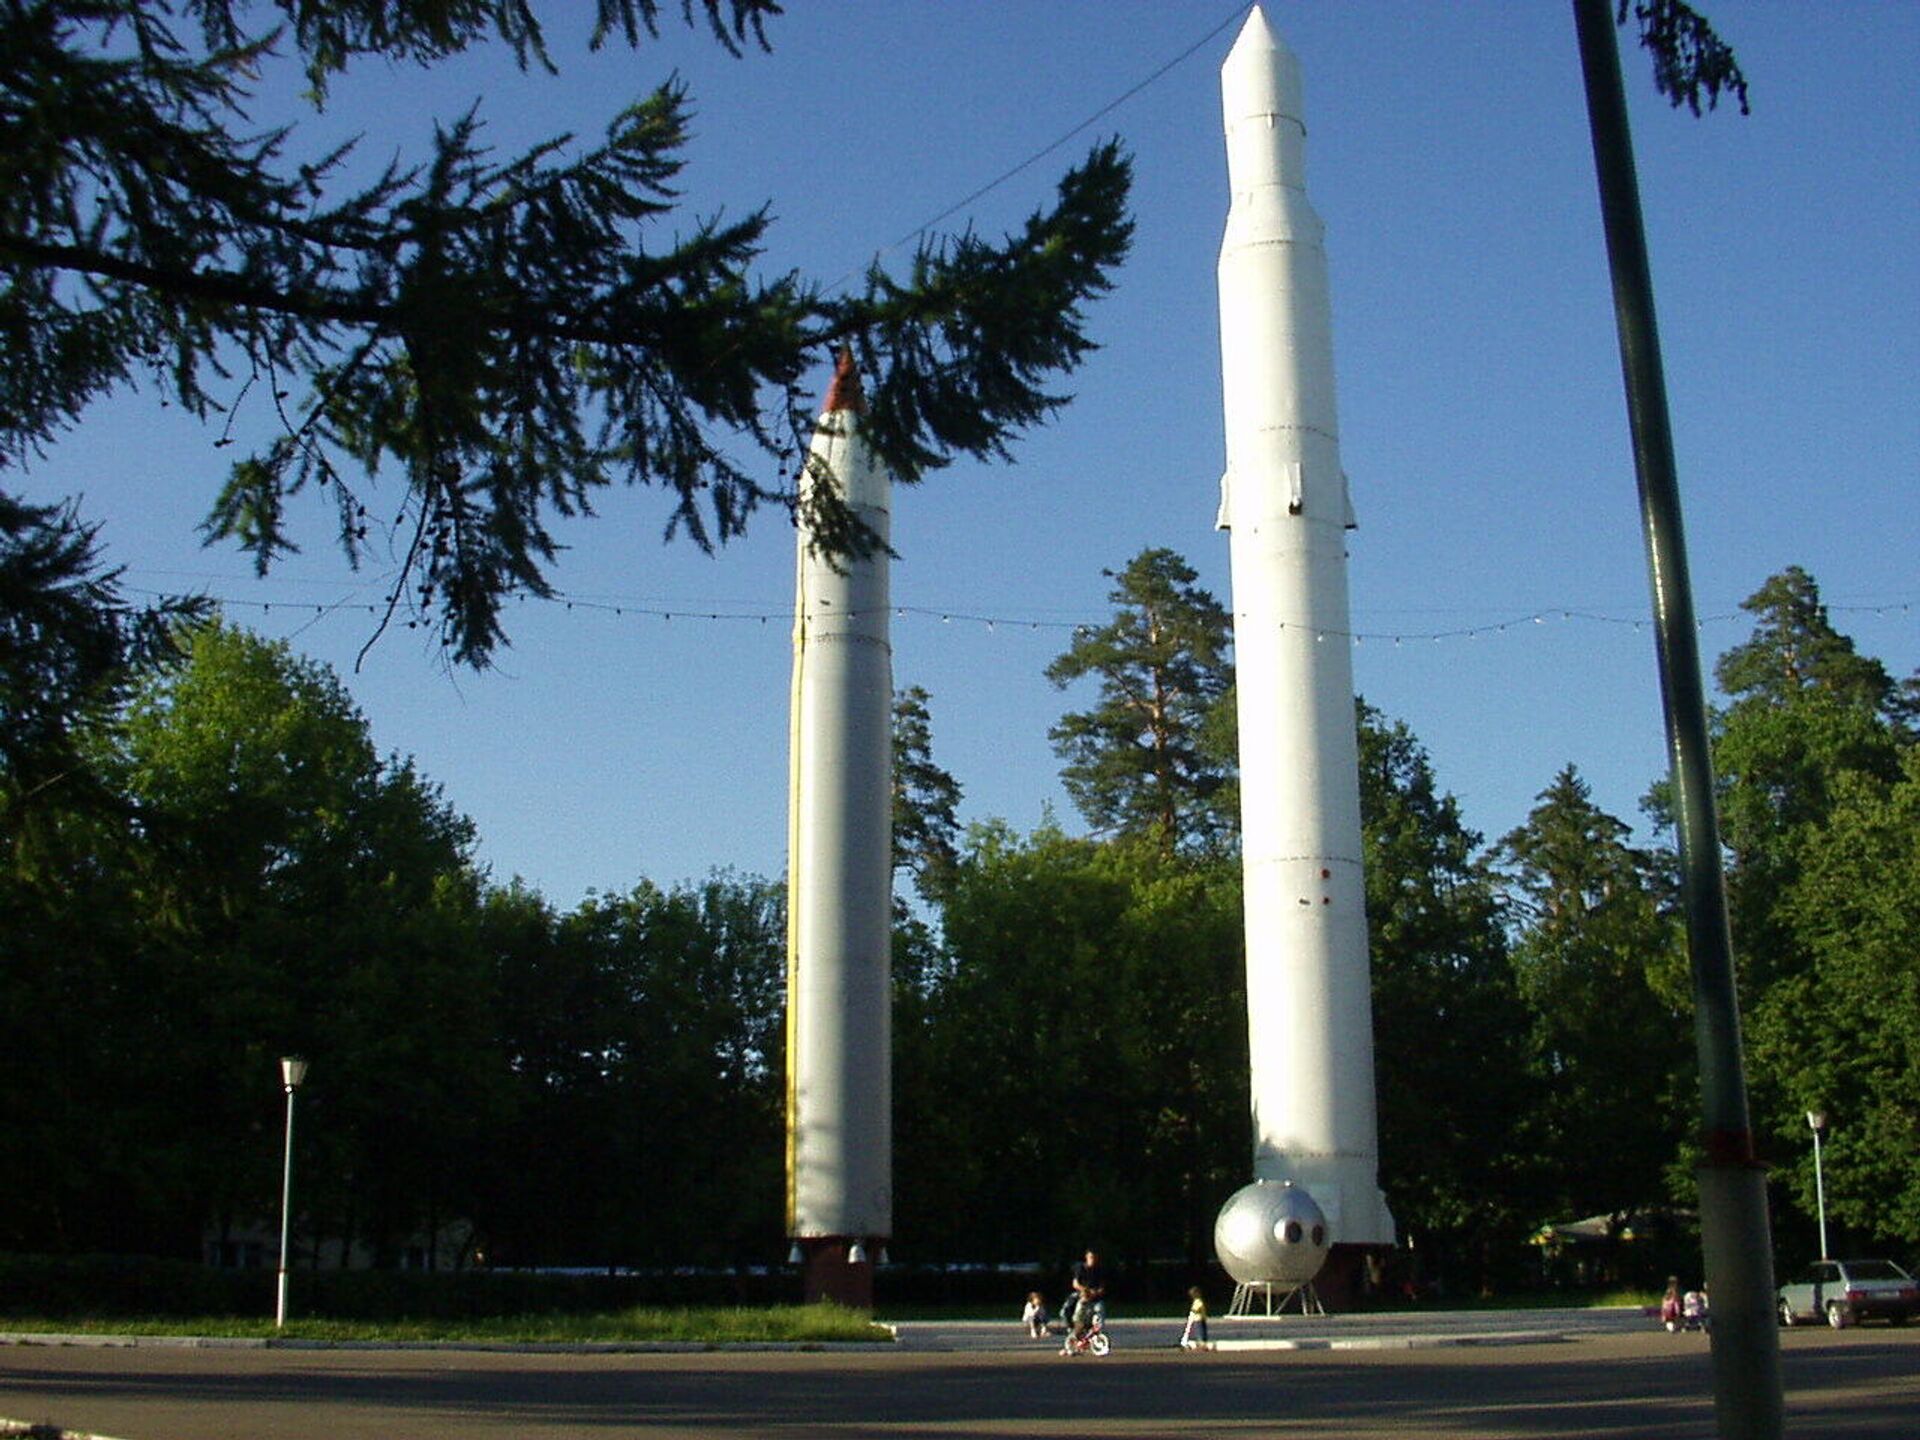 Ракеты МР-УР-100 УТТХ (РС-16Б) и Циклон-2 в музее РВСН - РИА Новости, 1920, 16.12.2020